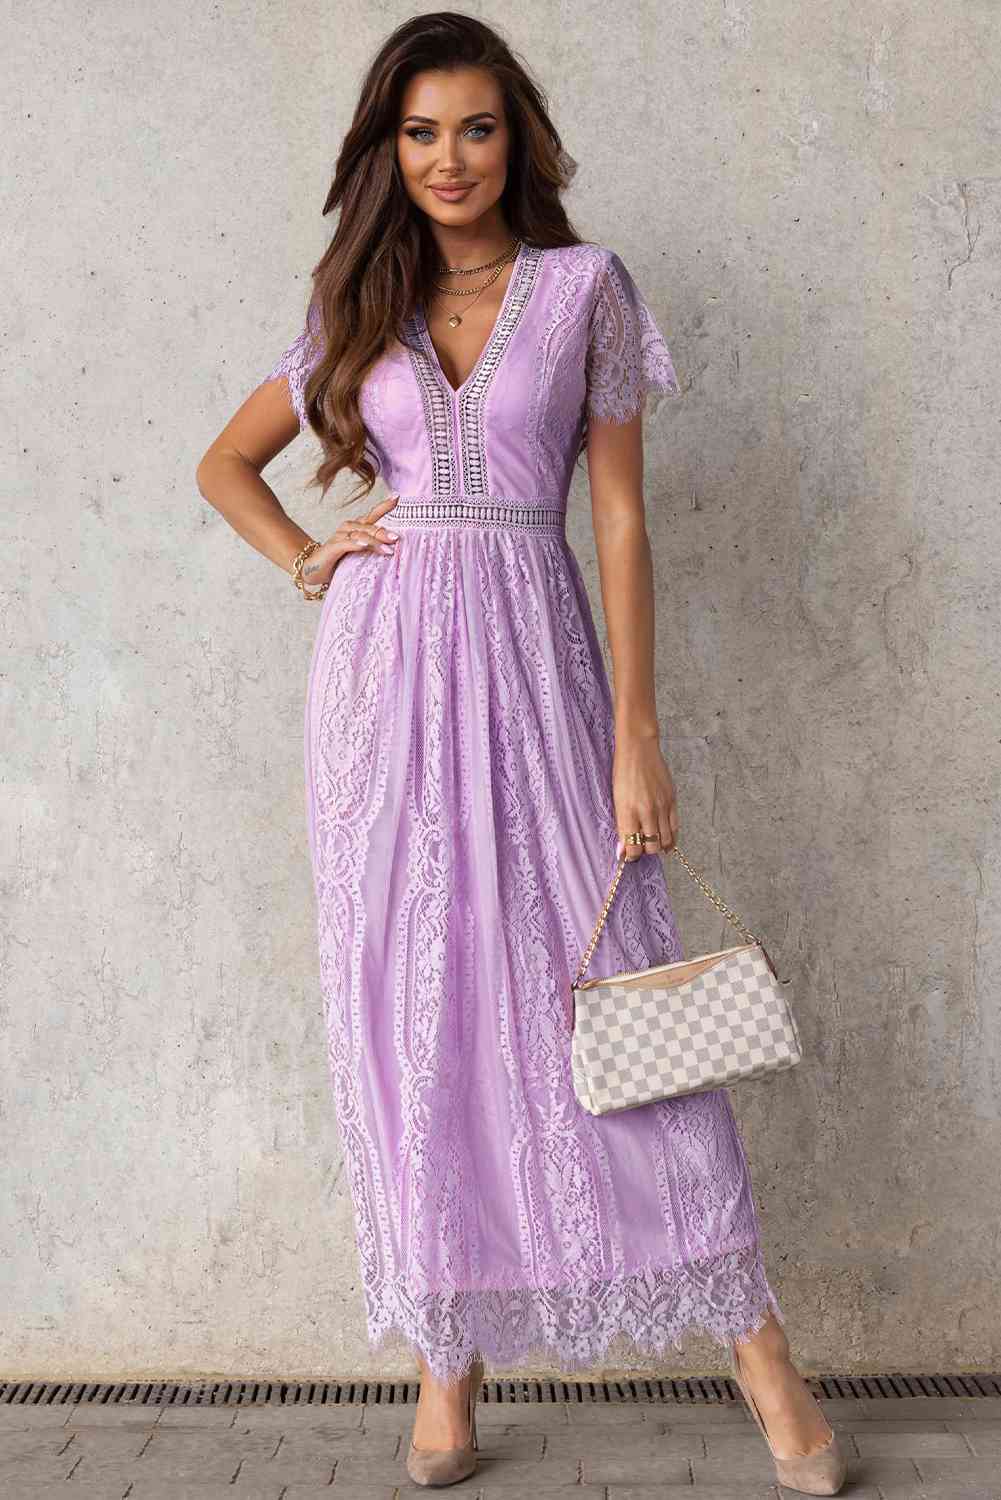 Scalloped Trim Lace Plunge Dress Lavender S 